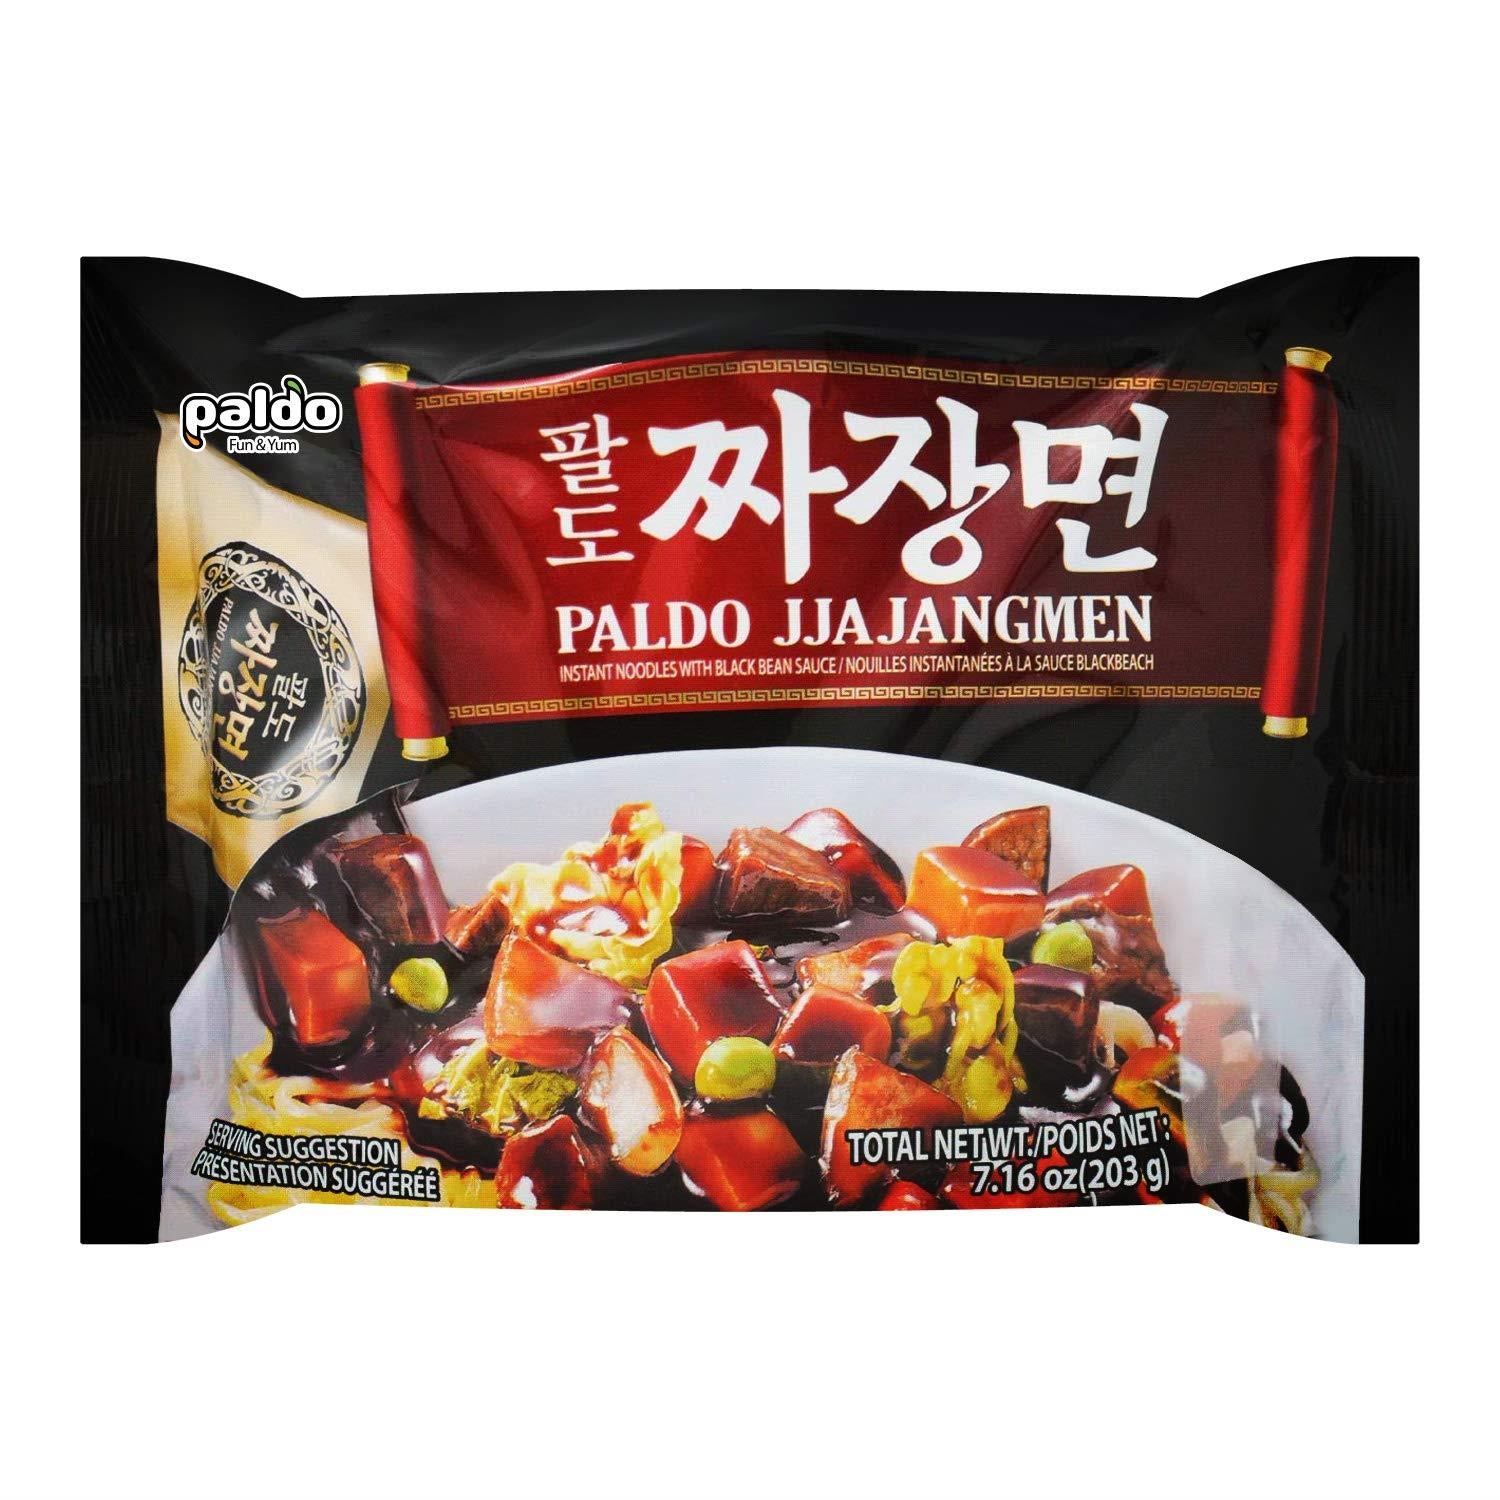 Paldo Fun & Yum Jjajangmen Instant Noodles, Pack of 8, Brothless Chajang Ramen with Savory & Sweet Black Bean Sauce, Best Oriental Style Korean Ramyun, Soupless K-Food, 팔도 짜장면 203g x 8